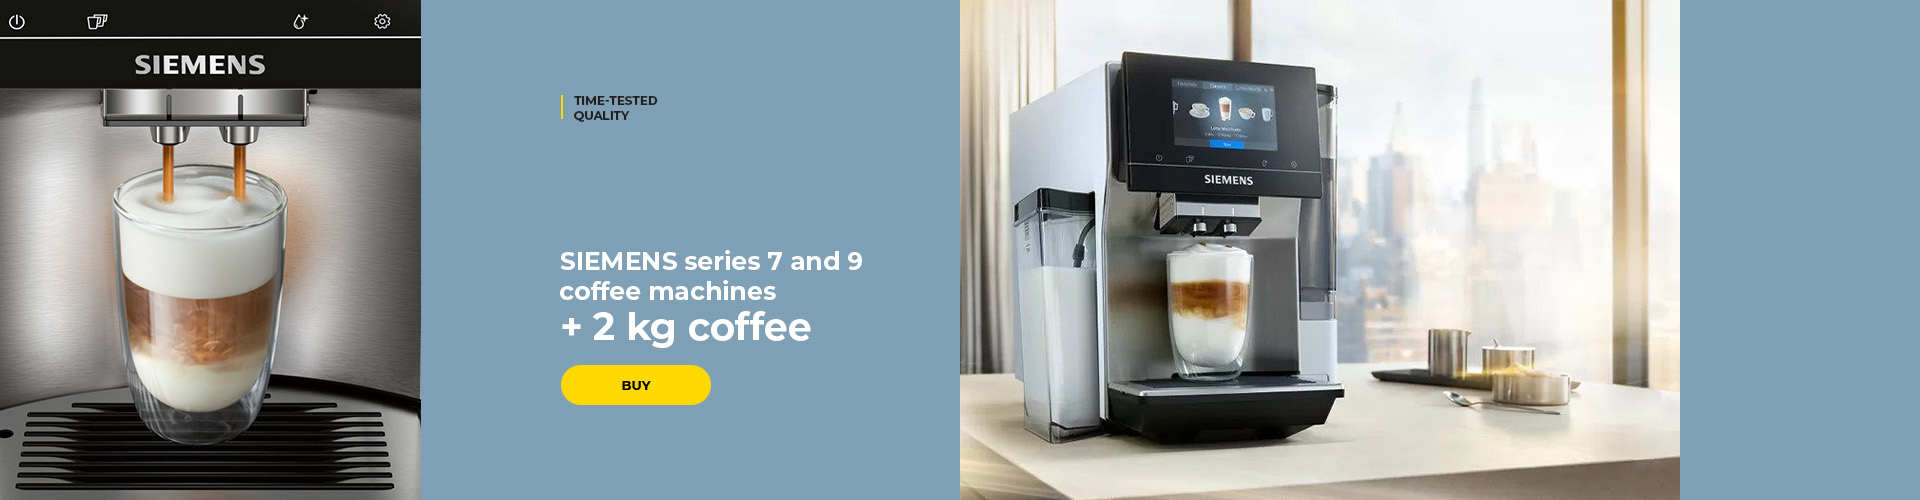 SIEMENS series 7 and 9 coffee machines + 2 kg of coffee